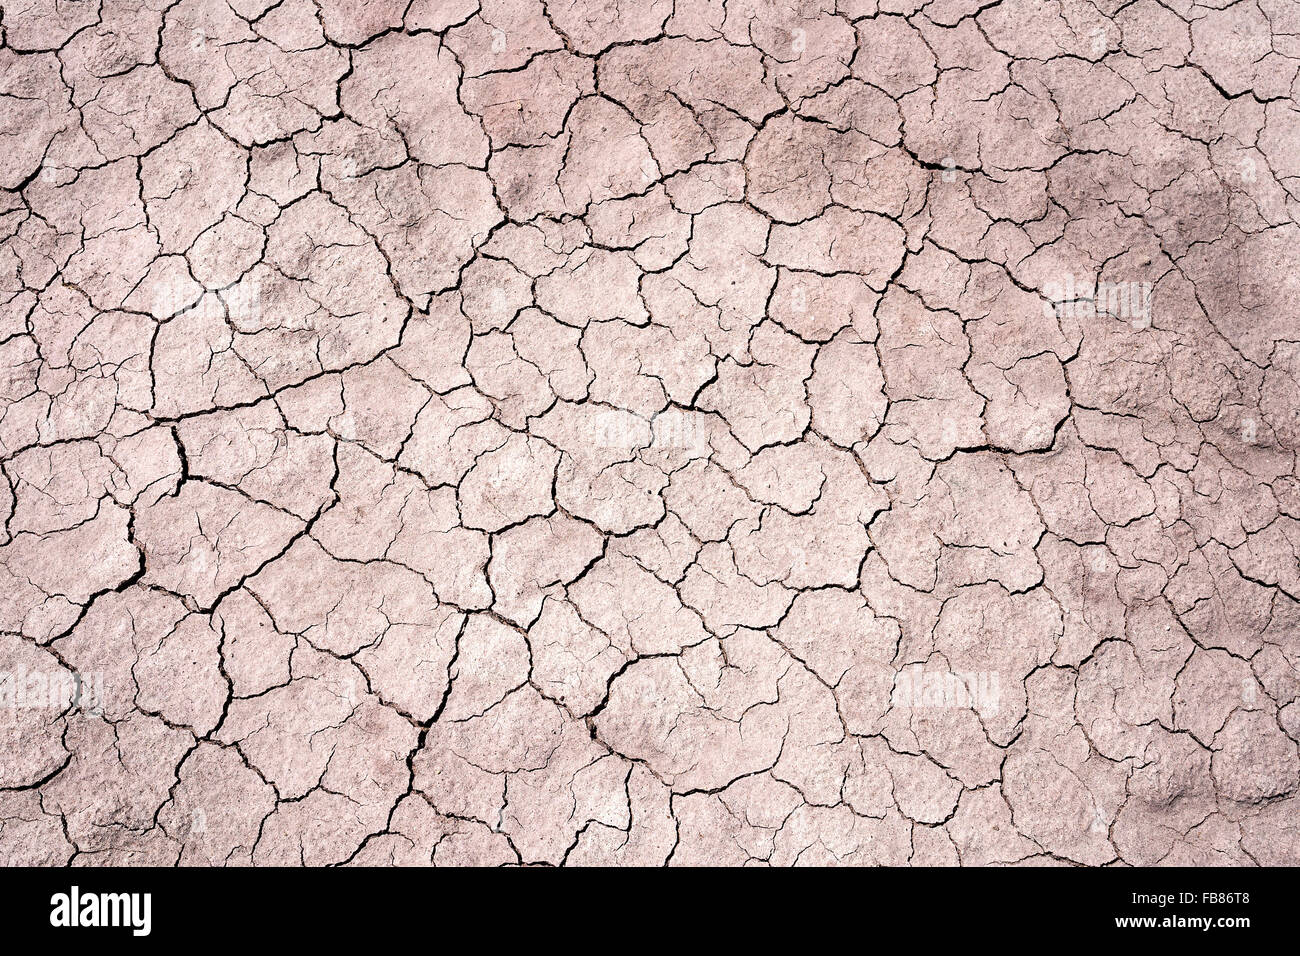 Dried earth, dry cracks in clay surface, at Cameron, Arizona, USA Stock Photo